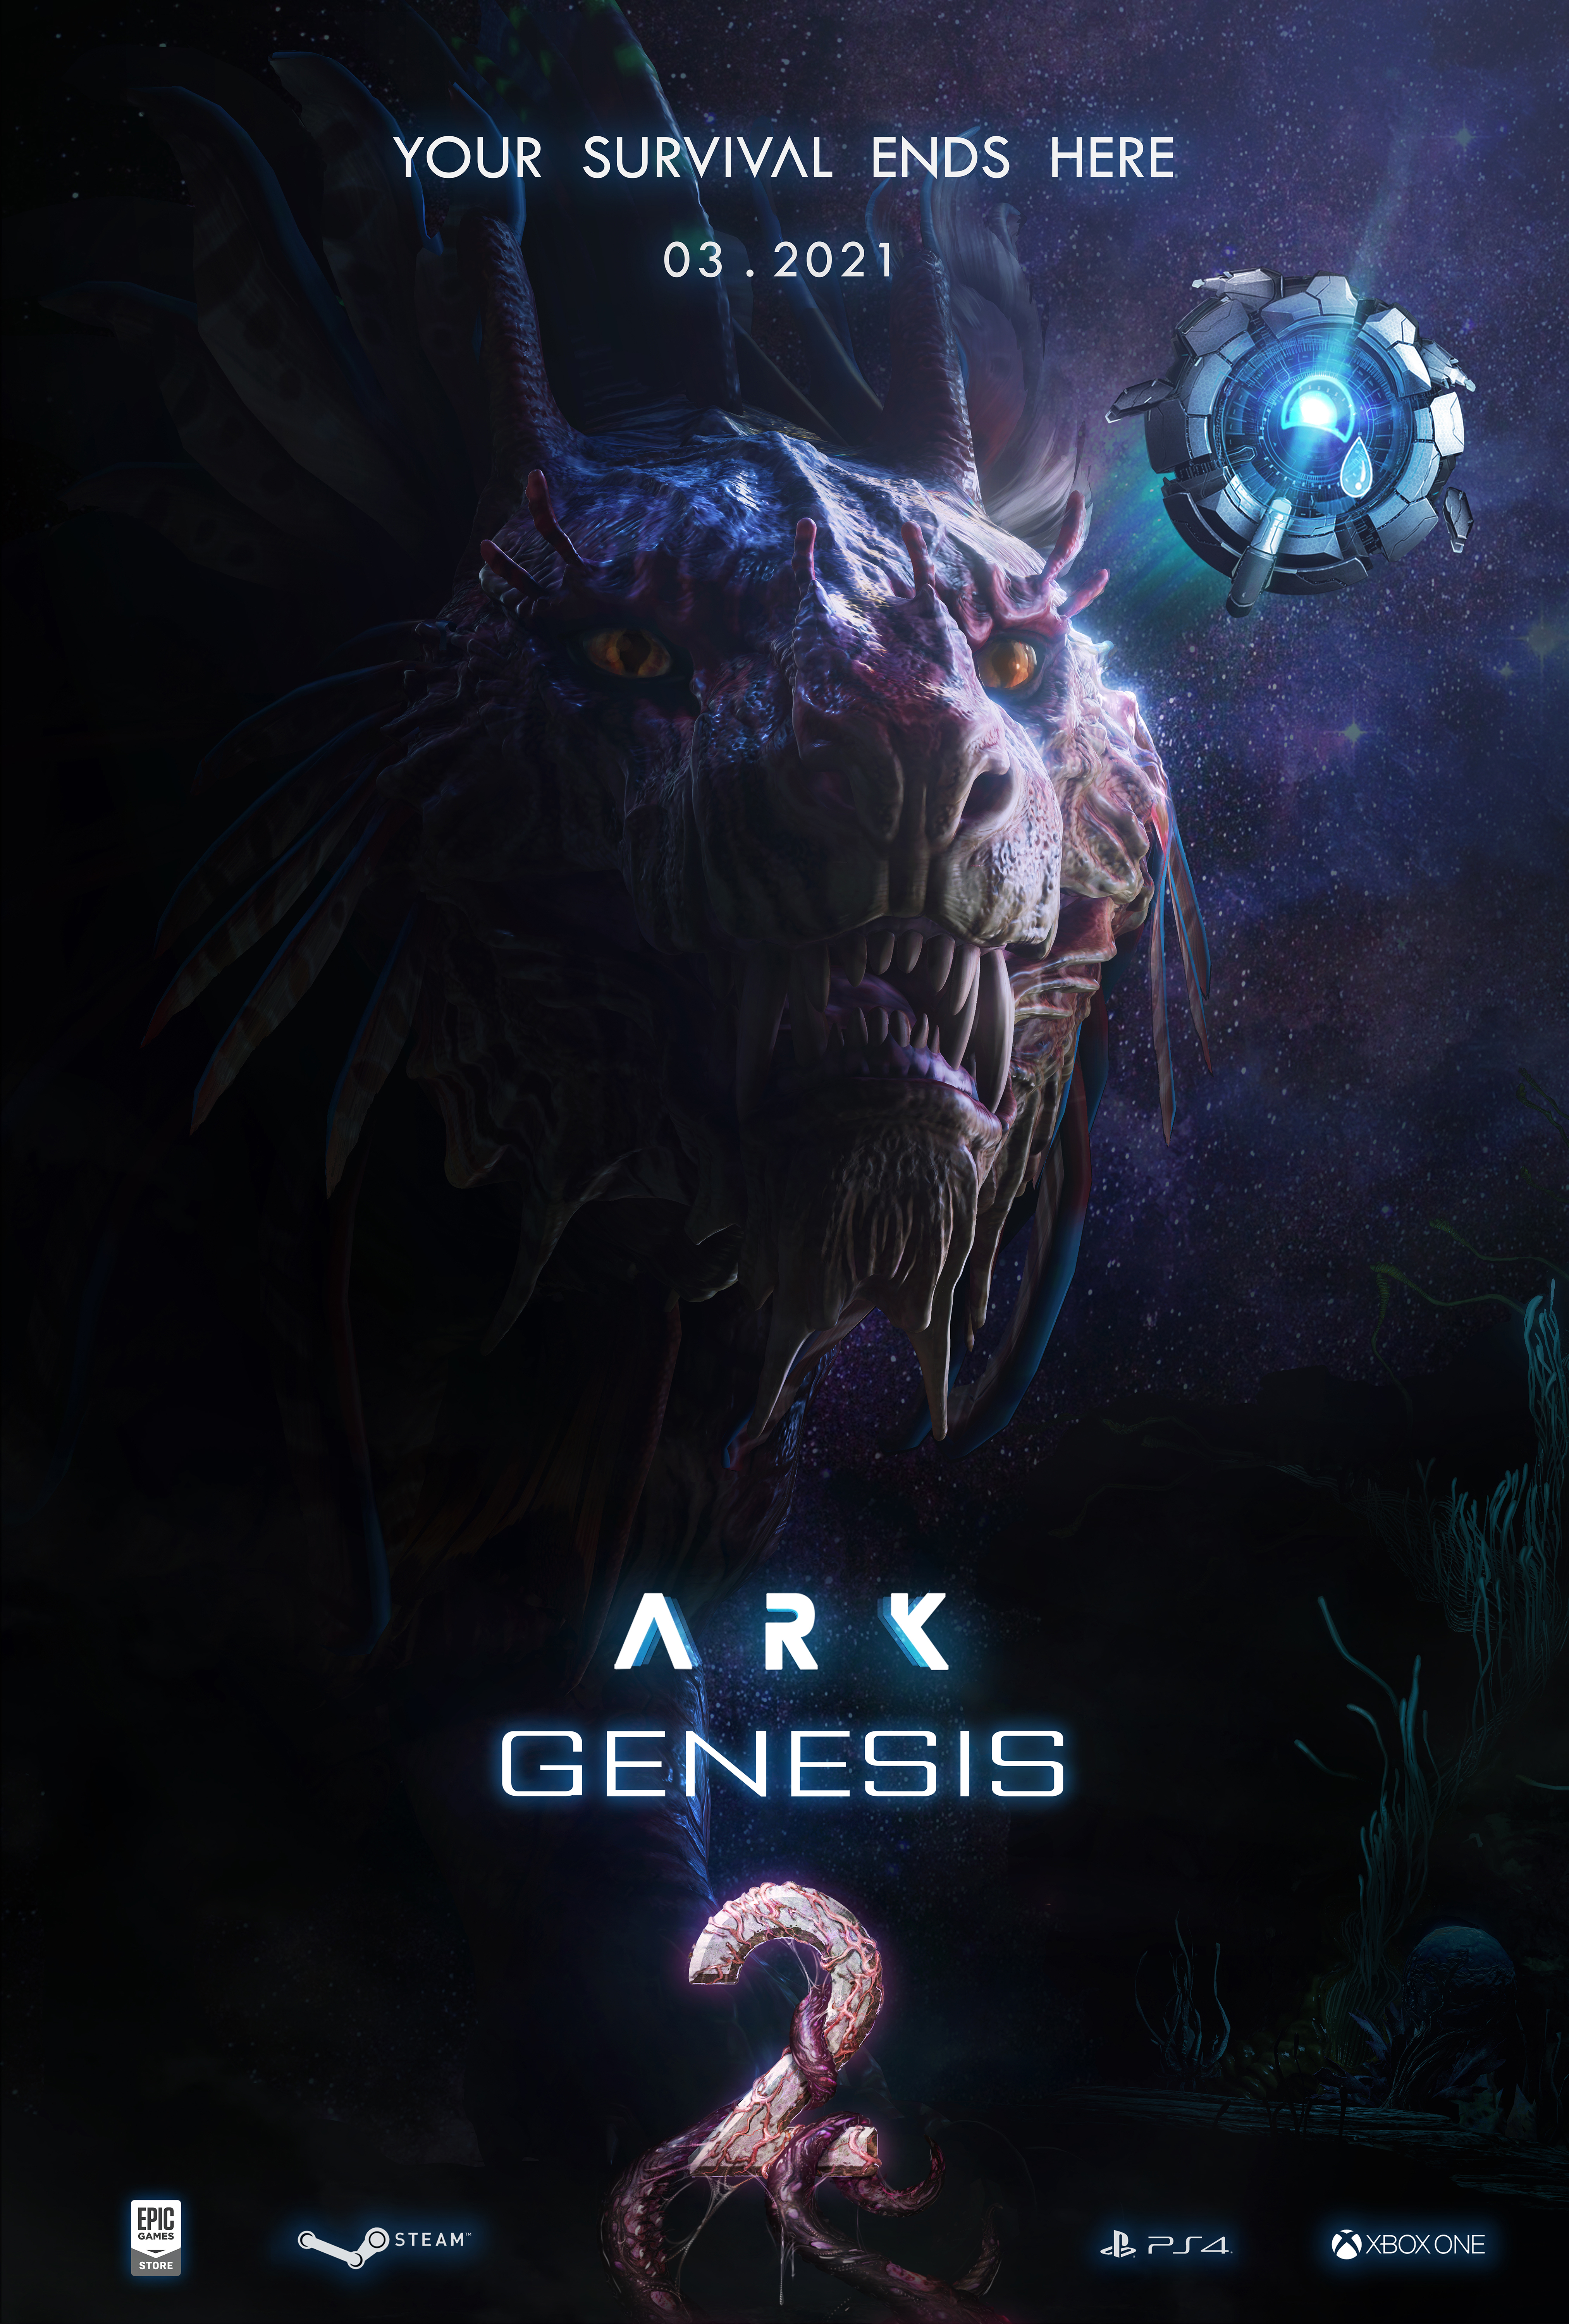 Arks Final Expansion- Genesis 2 Official Banner!! : r/ARK